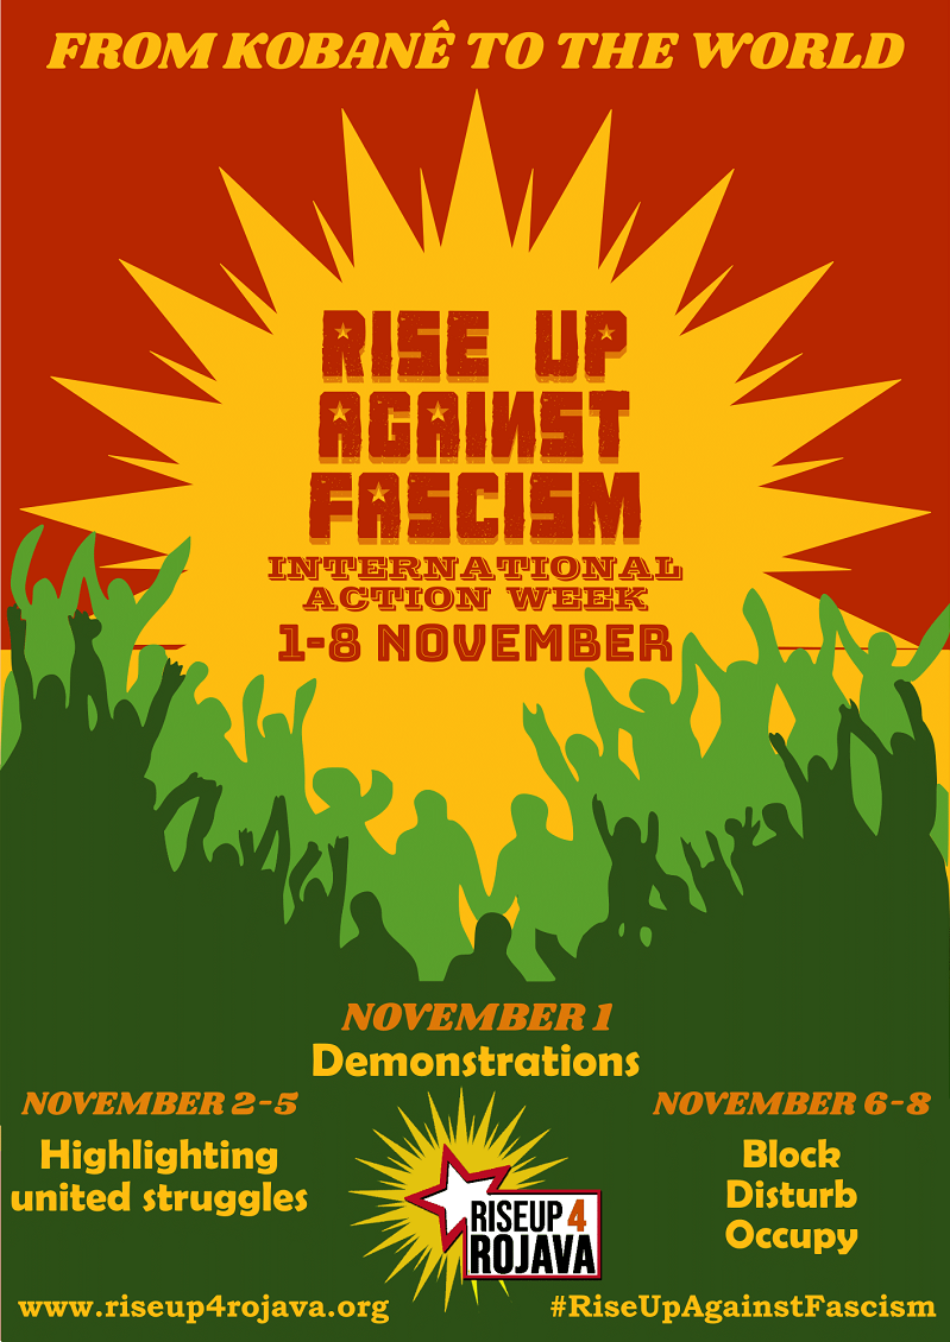 RiseUp4 the Revolution llama a participar en la Semana de Acción de Kobanê